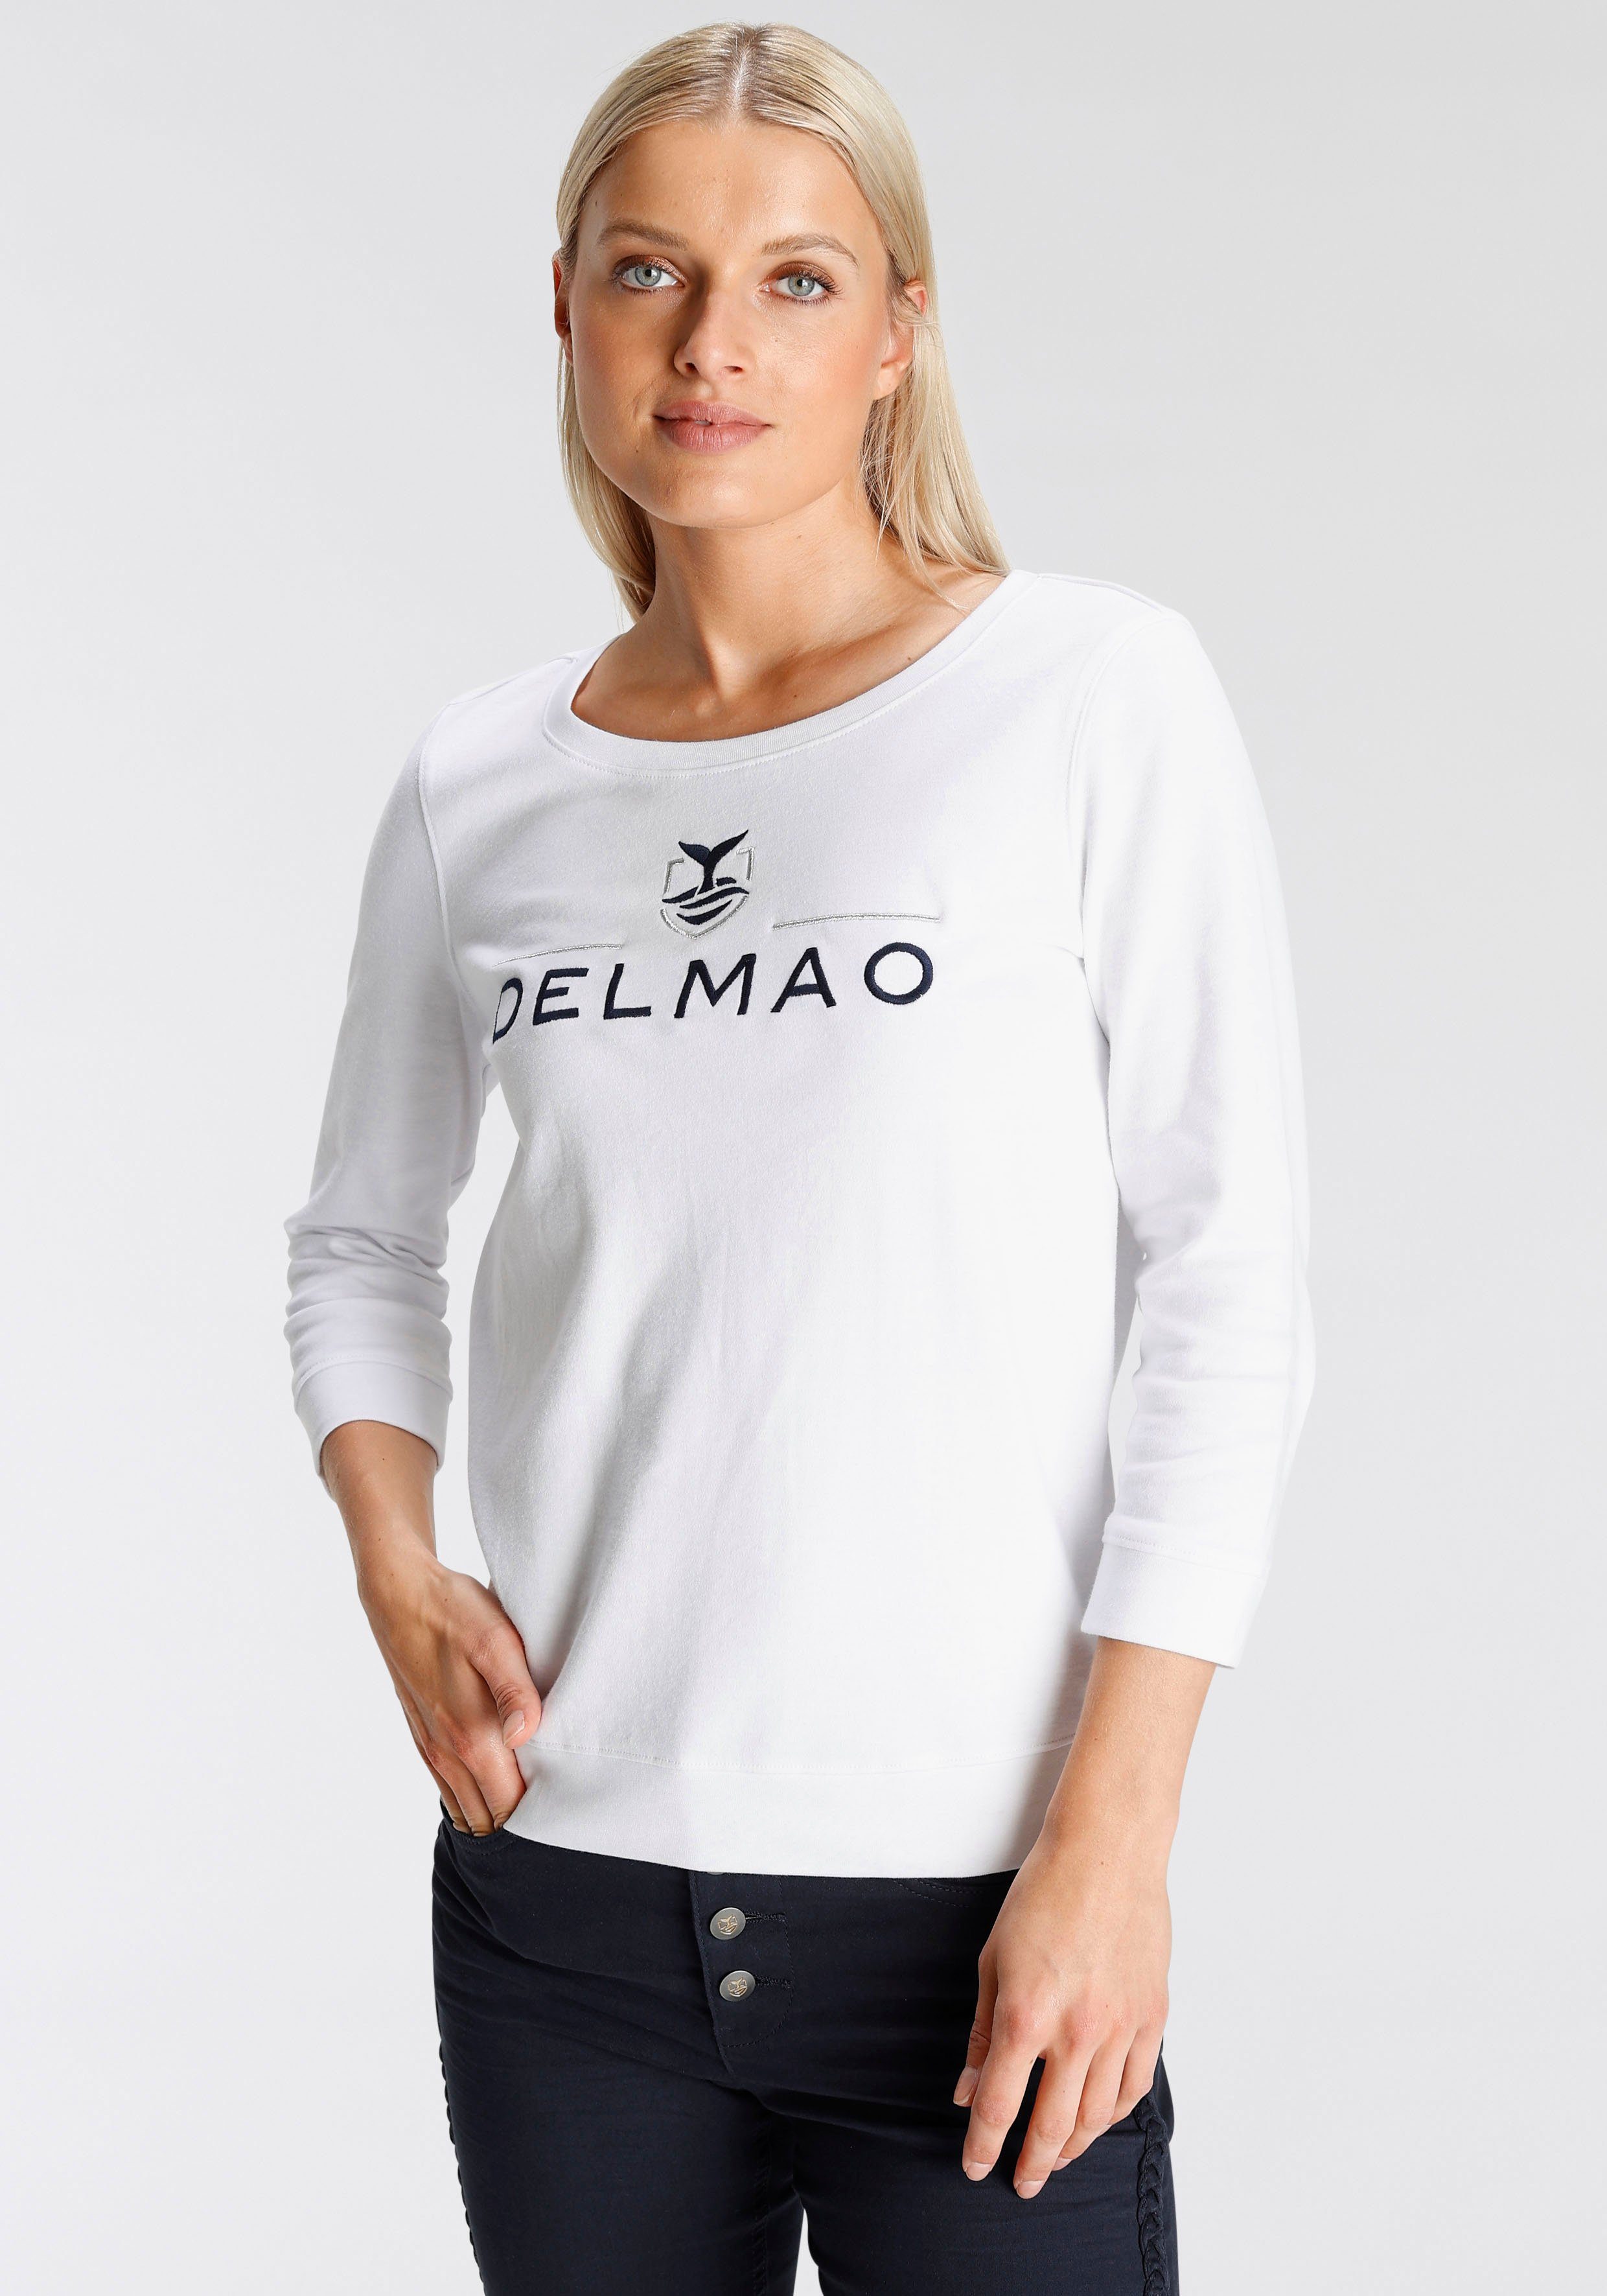 DELMAO Sweatshirt MARKE! NEUE